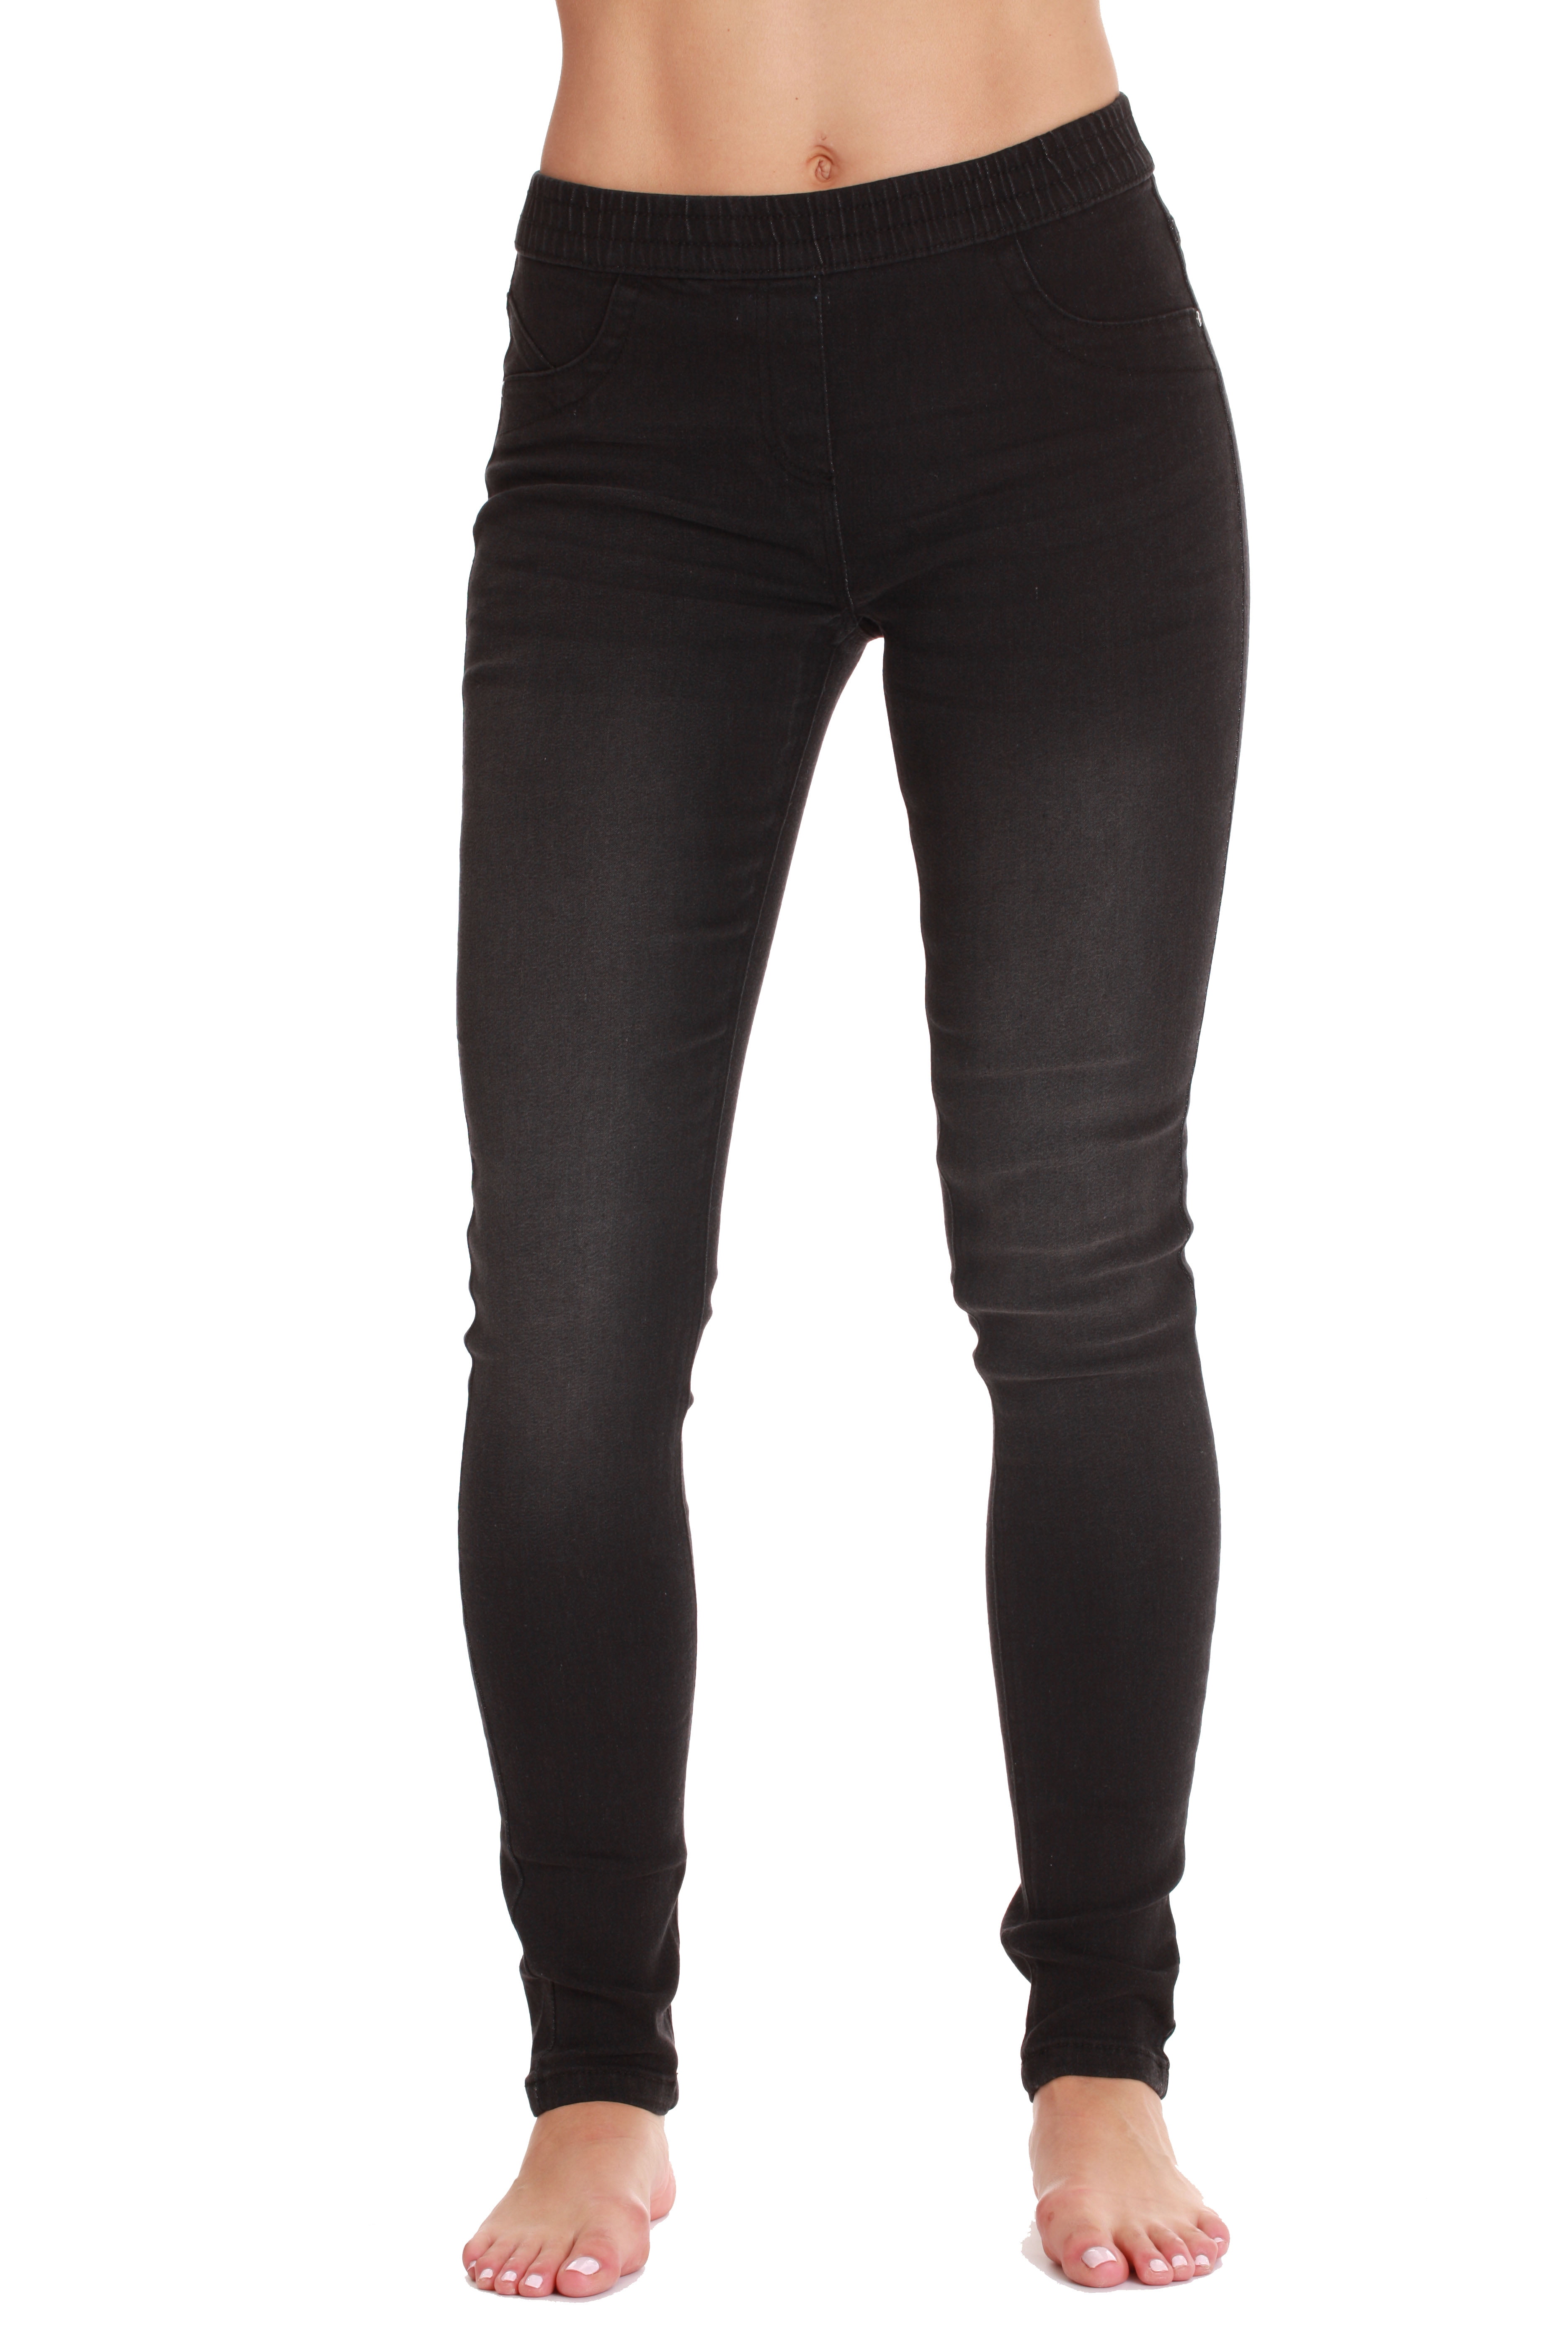 Just Love Women's Denim Jeggings with Pockets - Comfortable Stretch Jeans  Leggings (Dark Denim, Large)